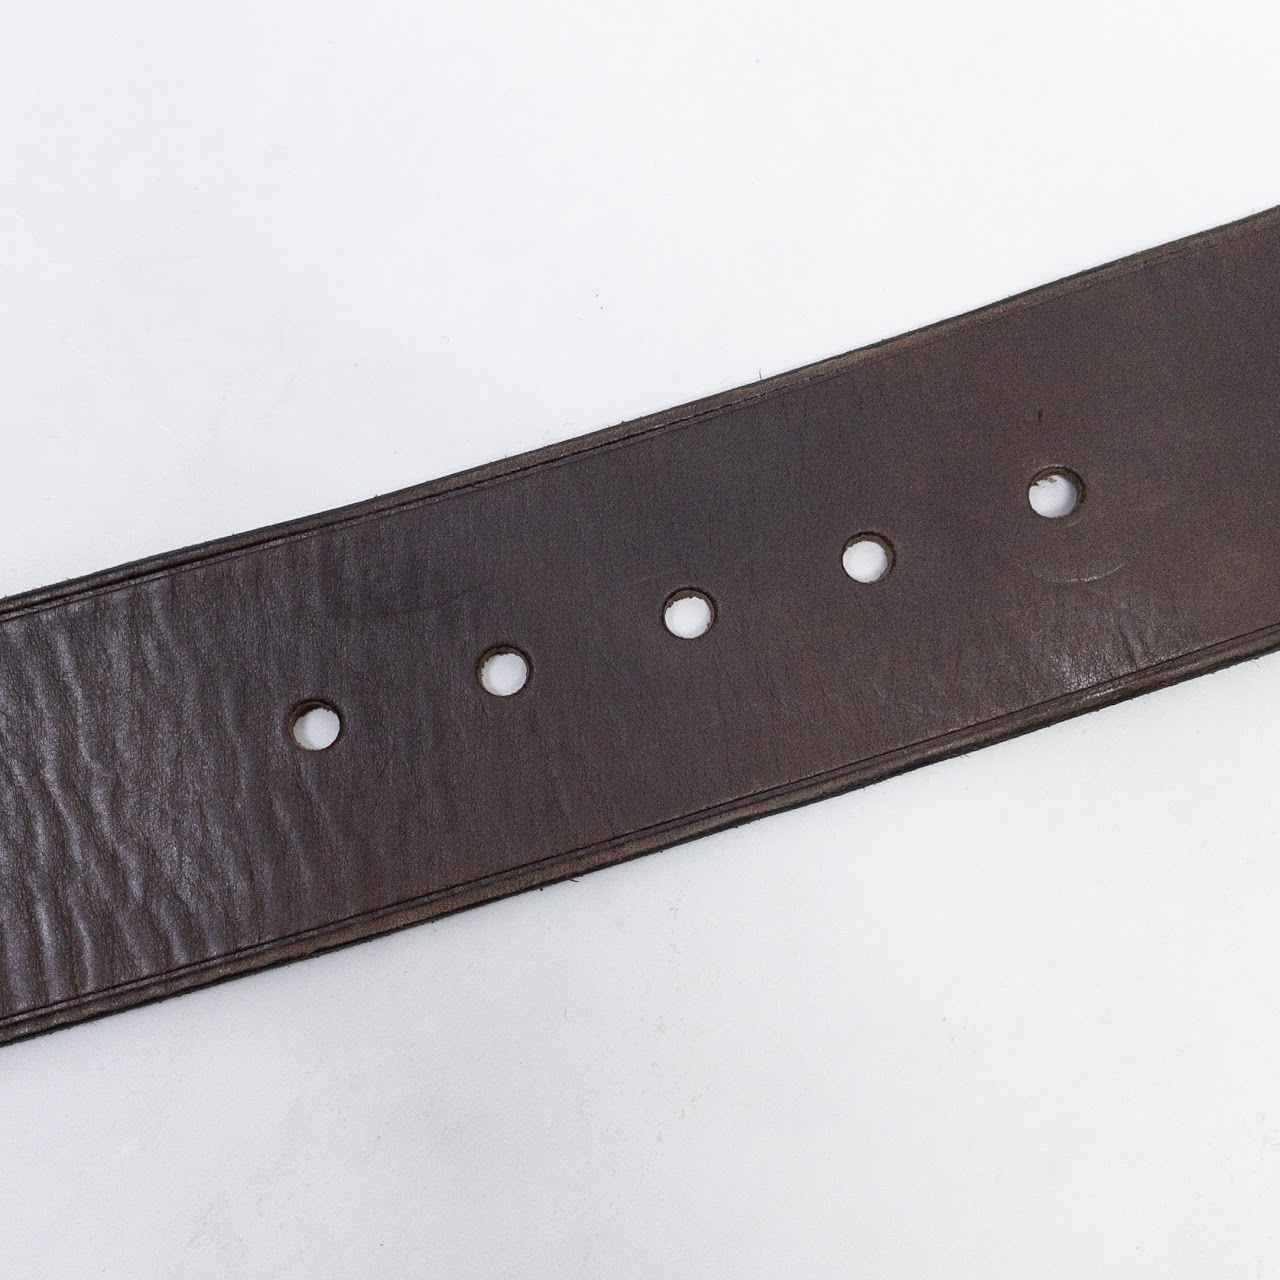 Prada Wide Leather Belt